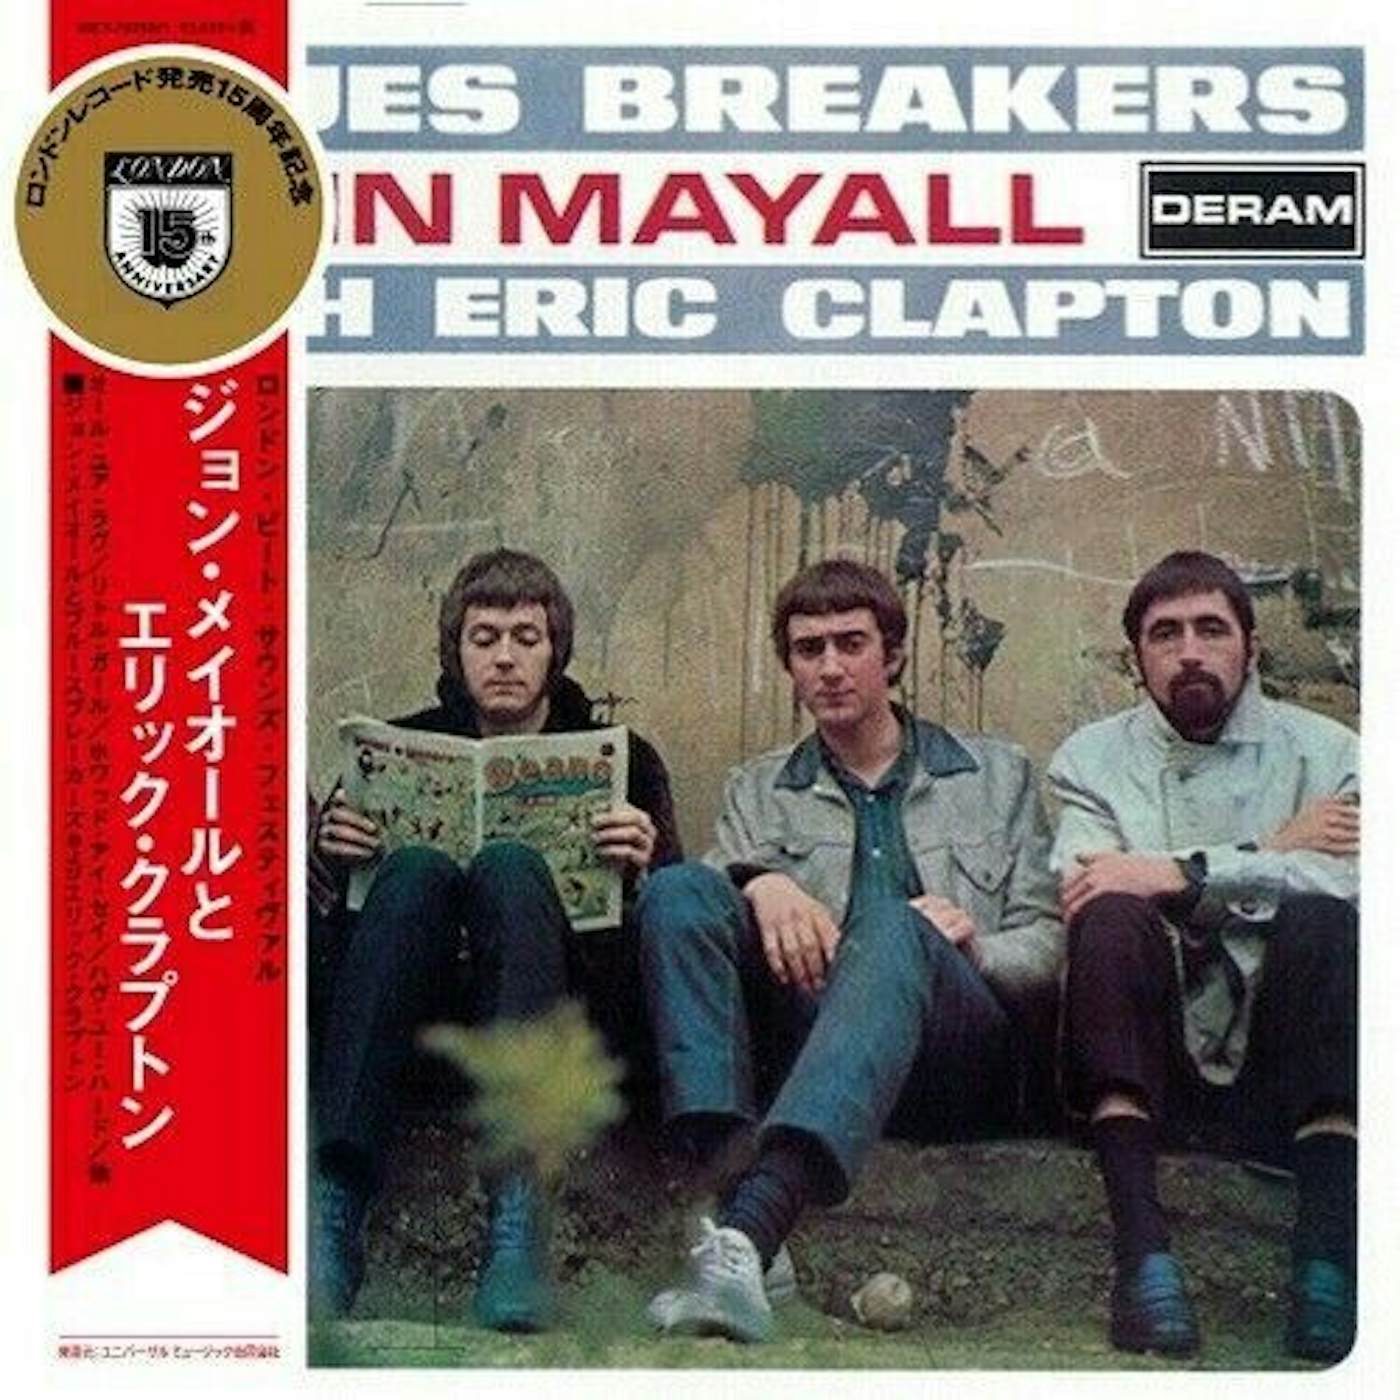 John Mayall & The Bluesbreakers BLUESBREAKERS WITH ERIC CLAPTON CD